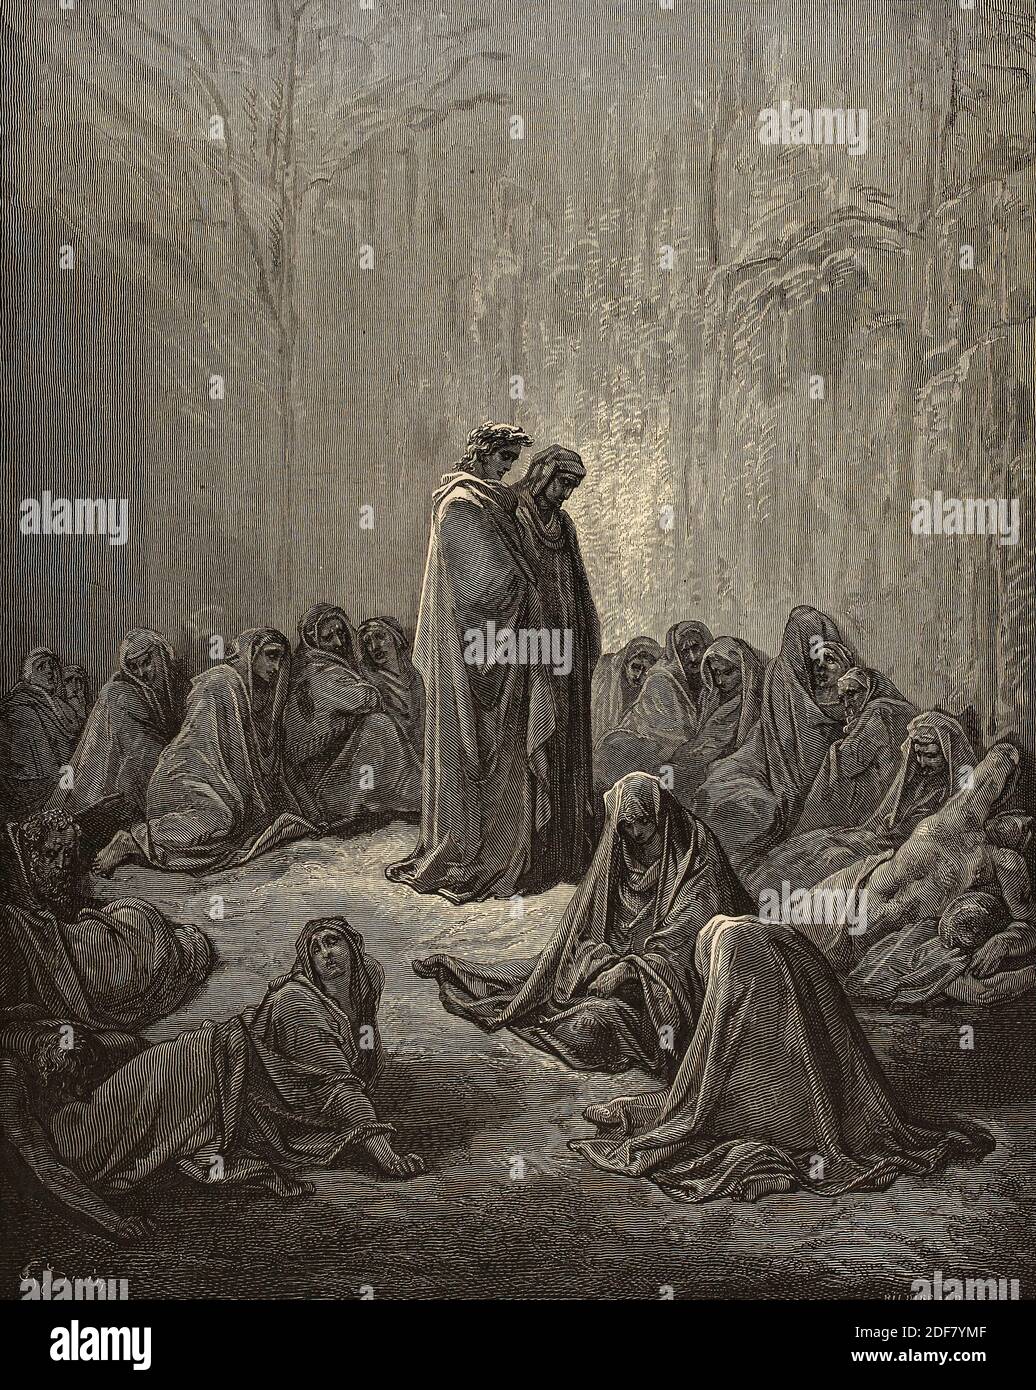 Dante - Divina Commedia - Purgatorio - Ilustración de Gustave Dorè - Canto XIII - envidiable Foto de stock